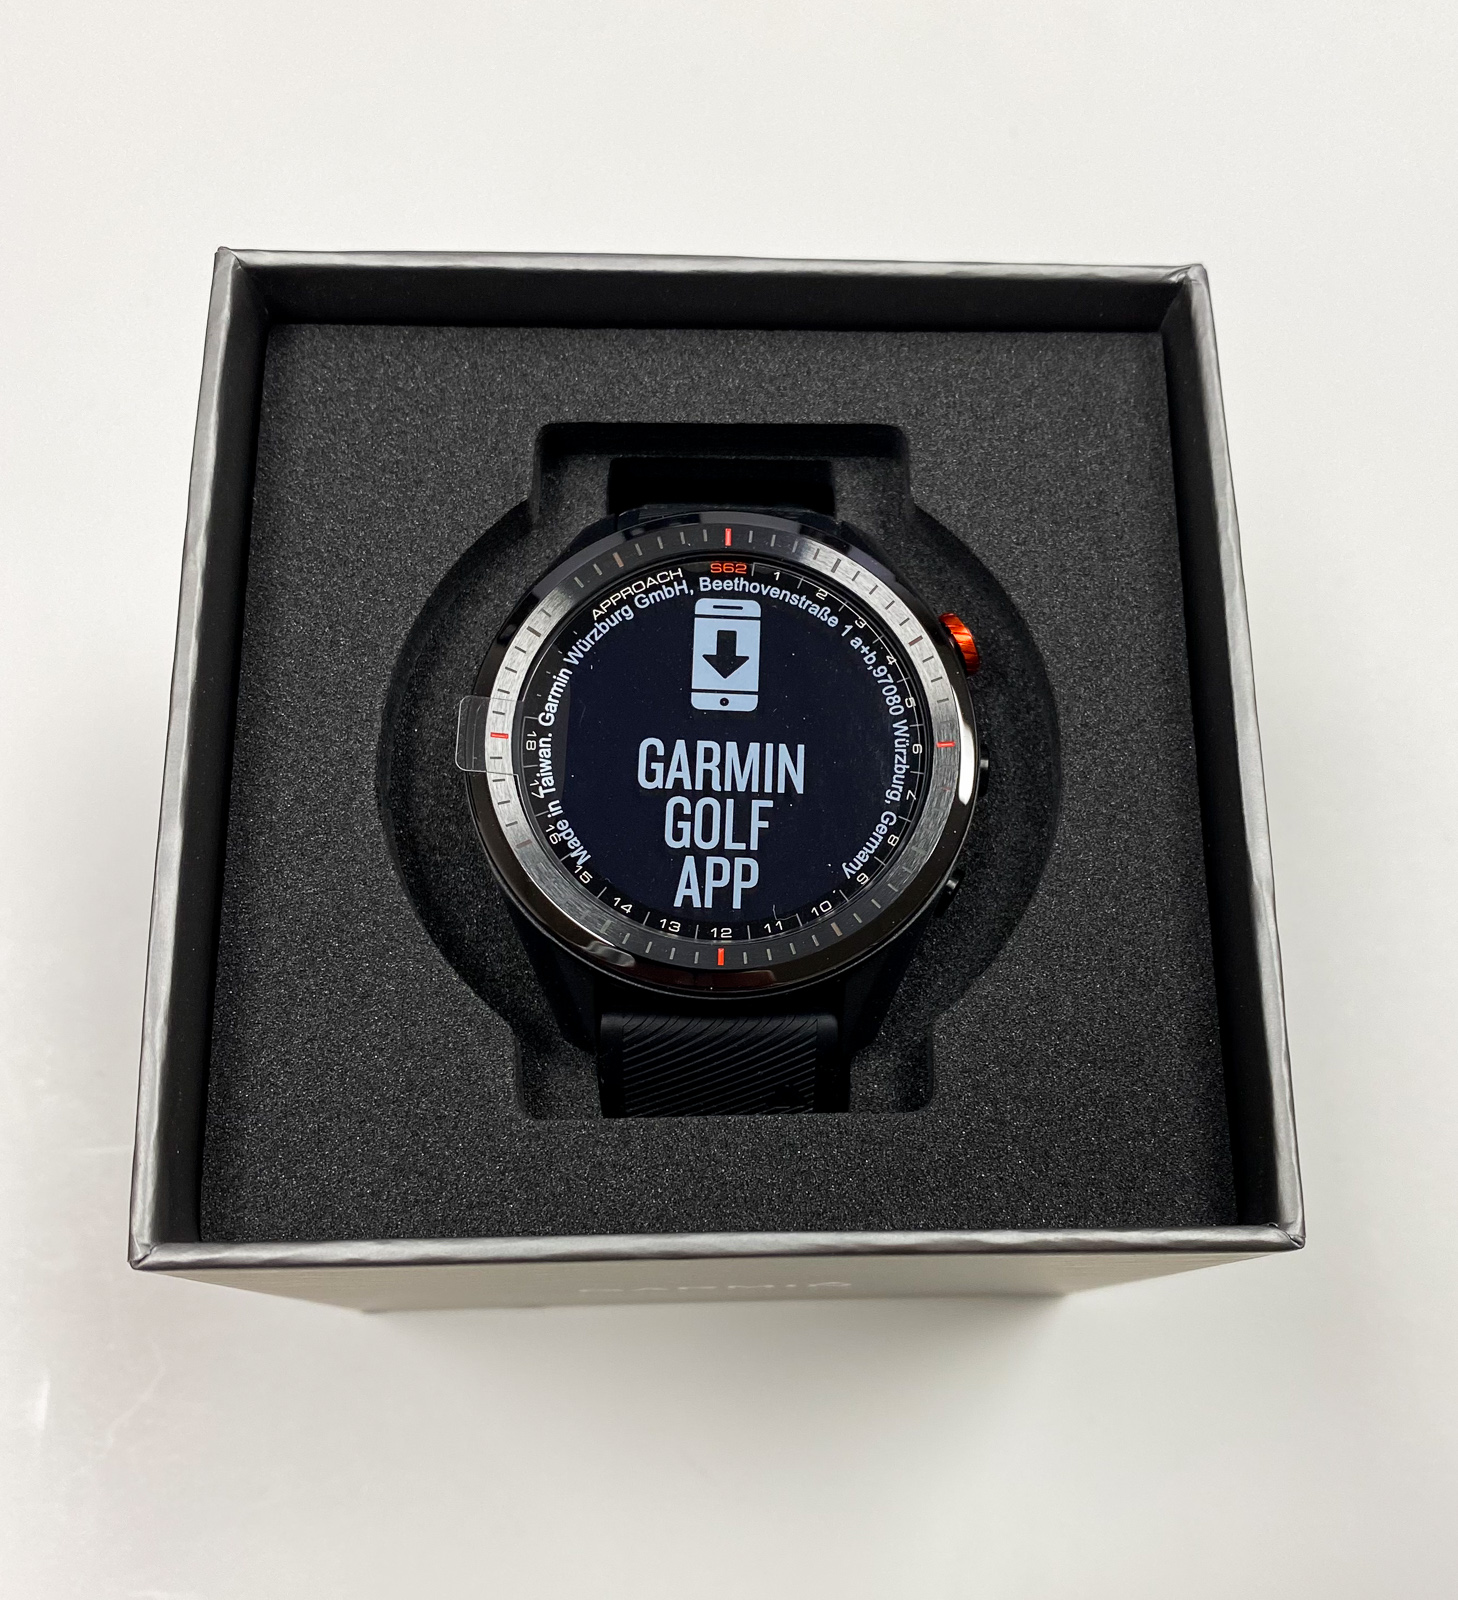 Garmin GPS Golf Watch Review: Is It Worth